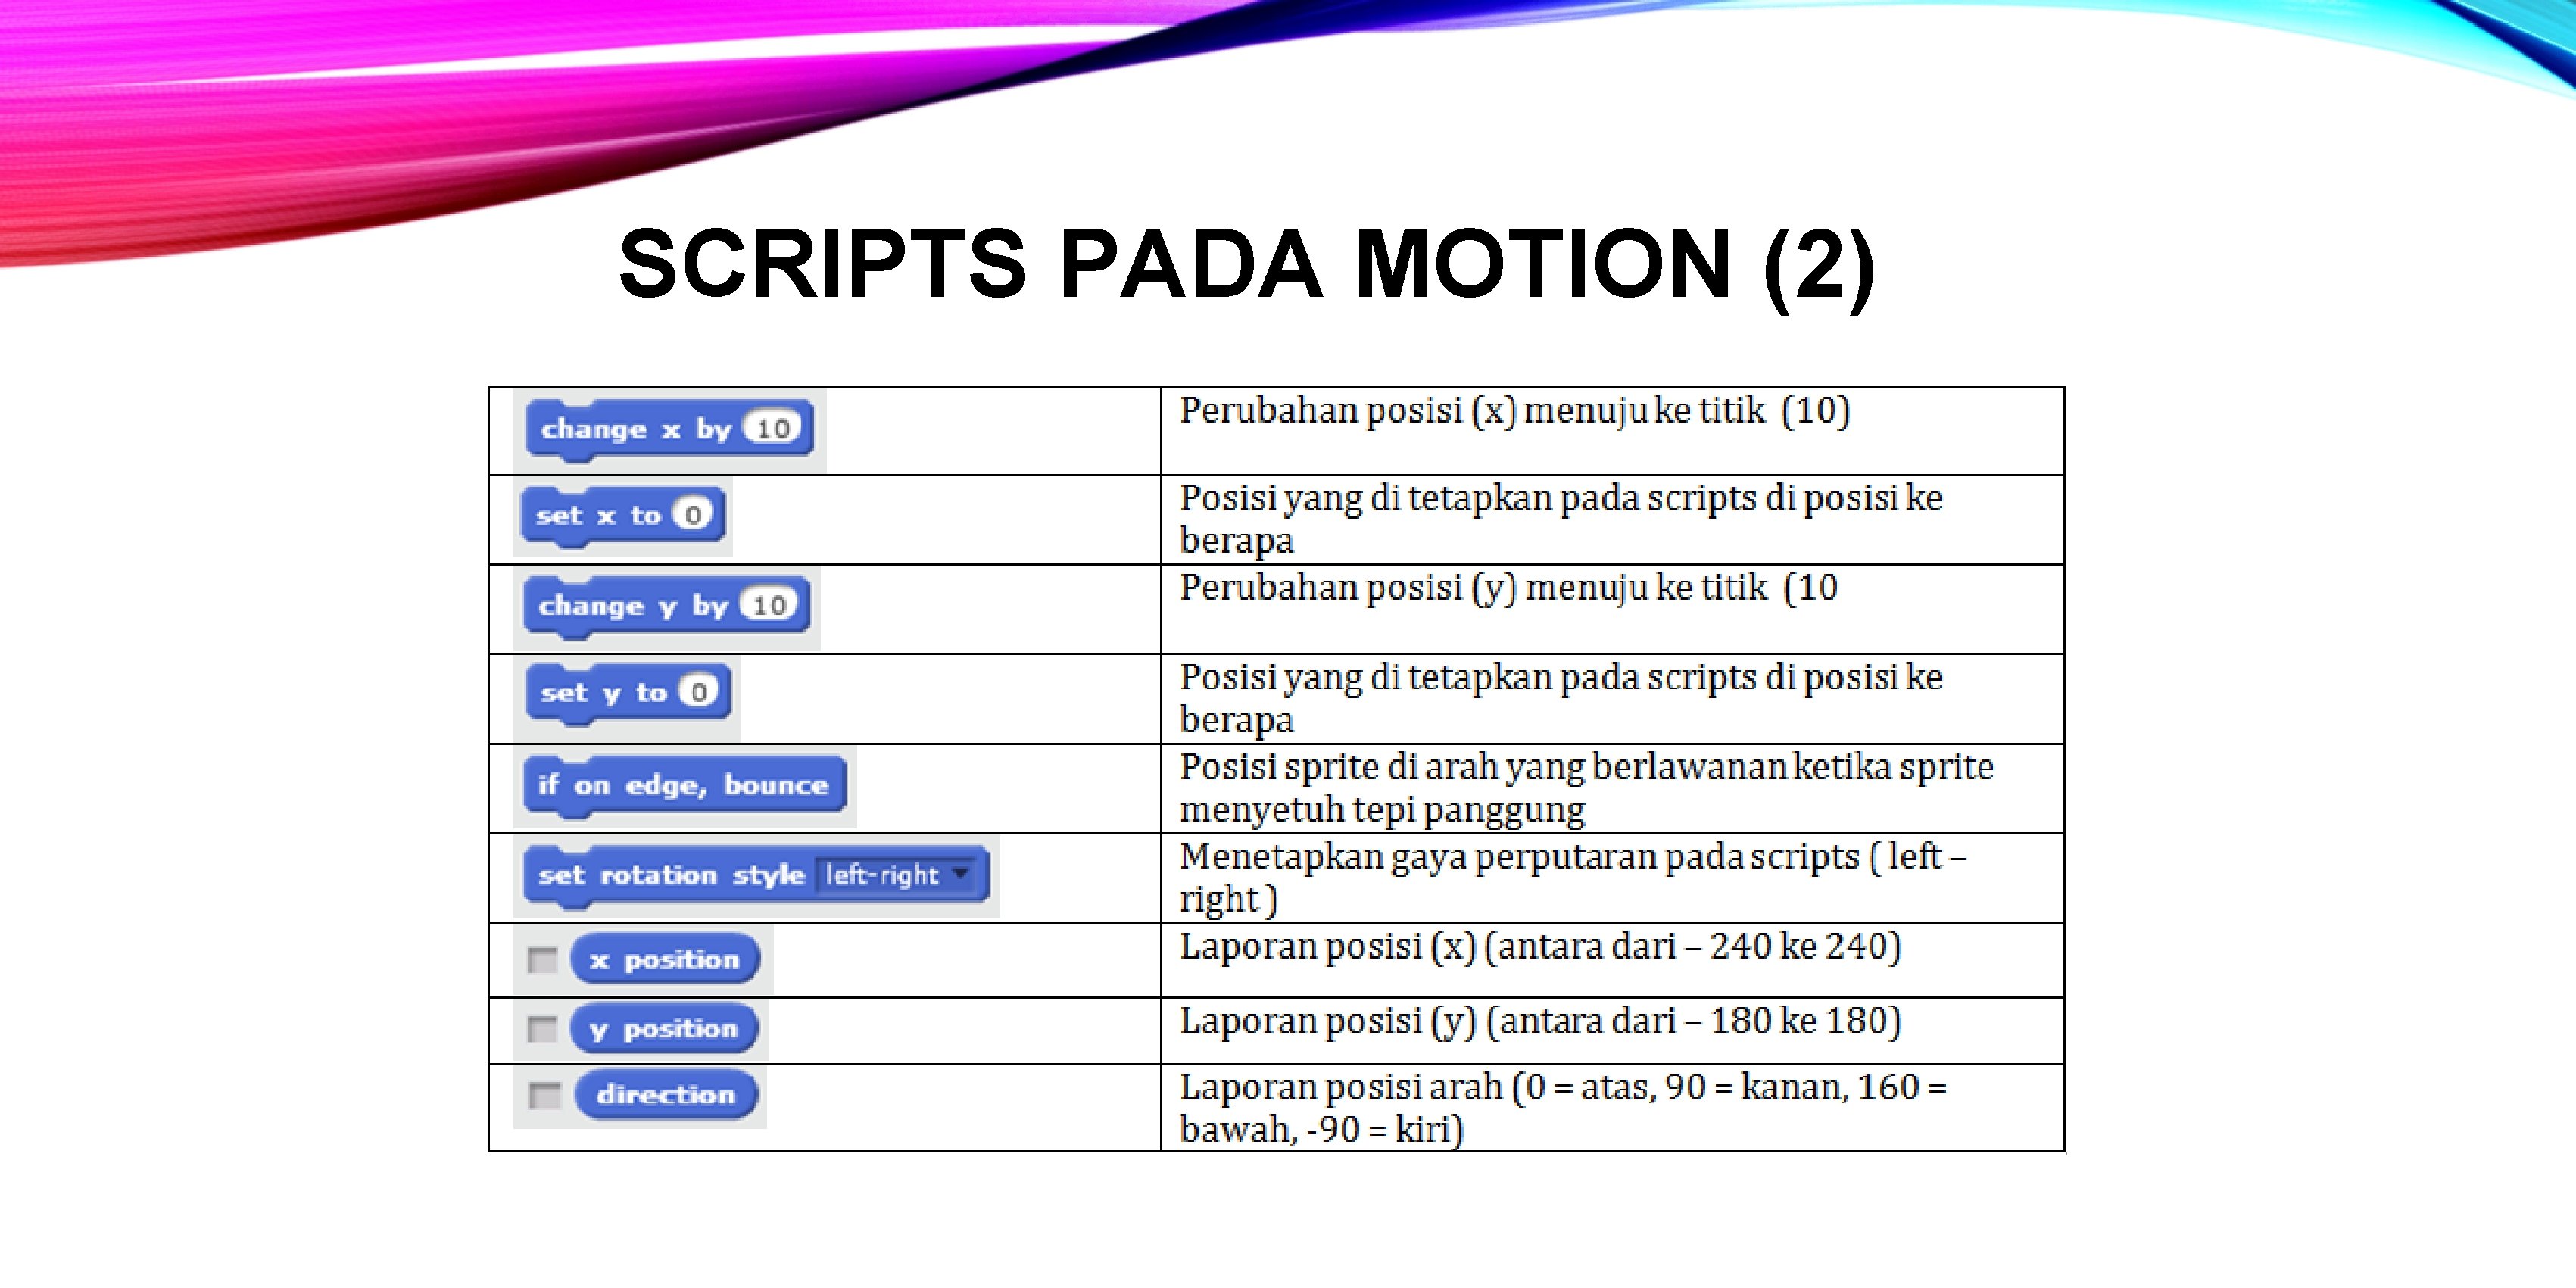 SCRIPTS PADA MOTION (2) 